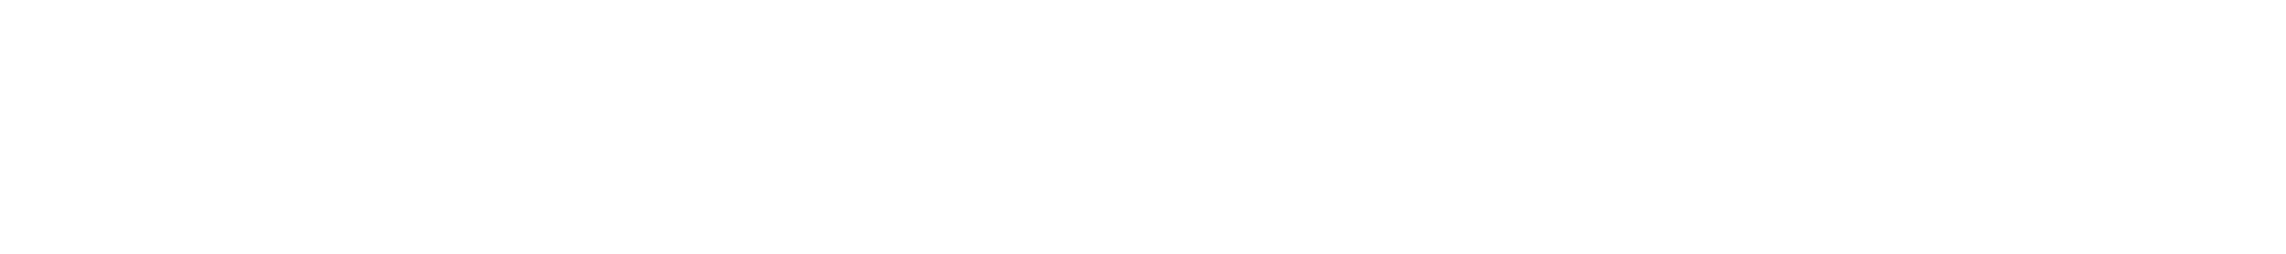 Symphony-Footer-Logo